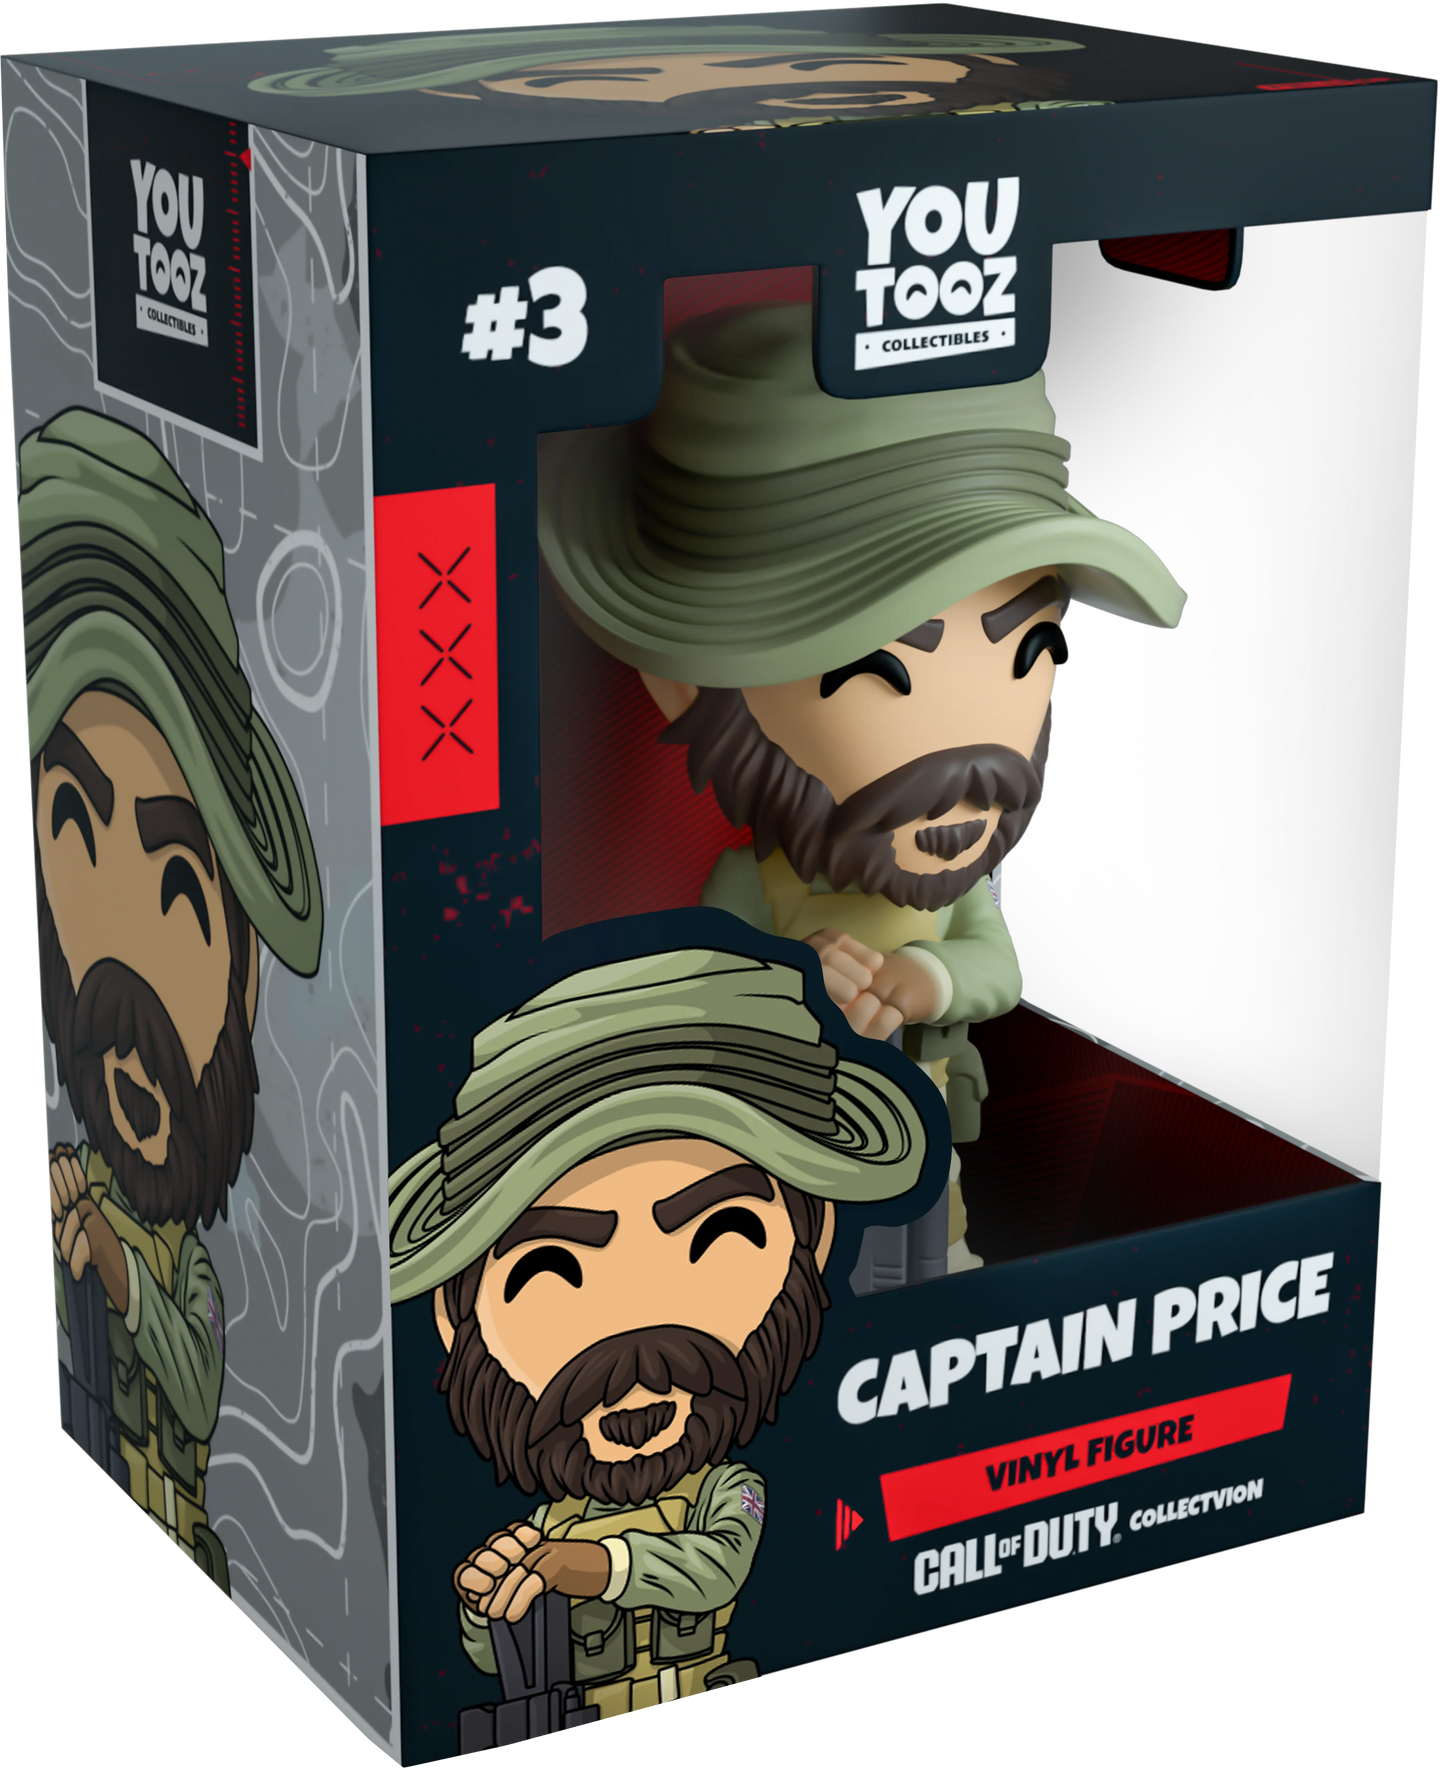 Call of Duty Vinyl figurine Captain Price Youtooz